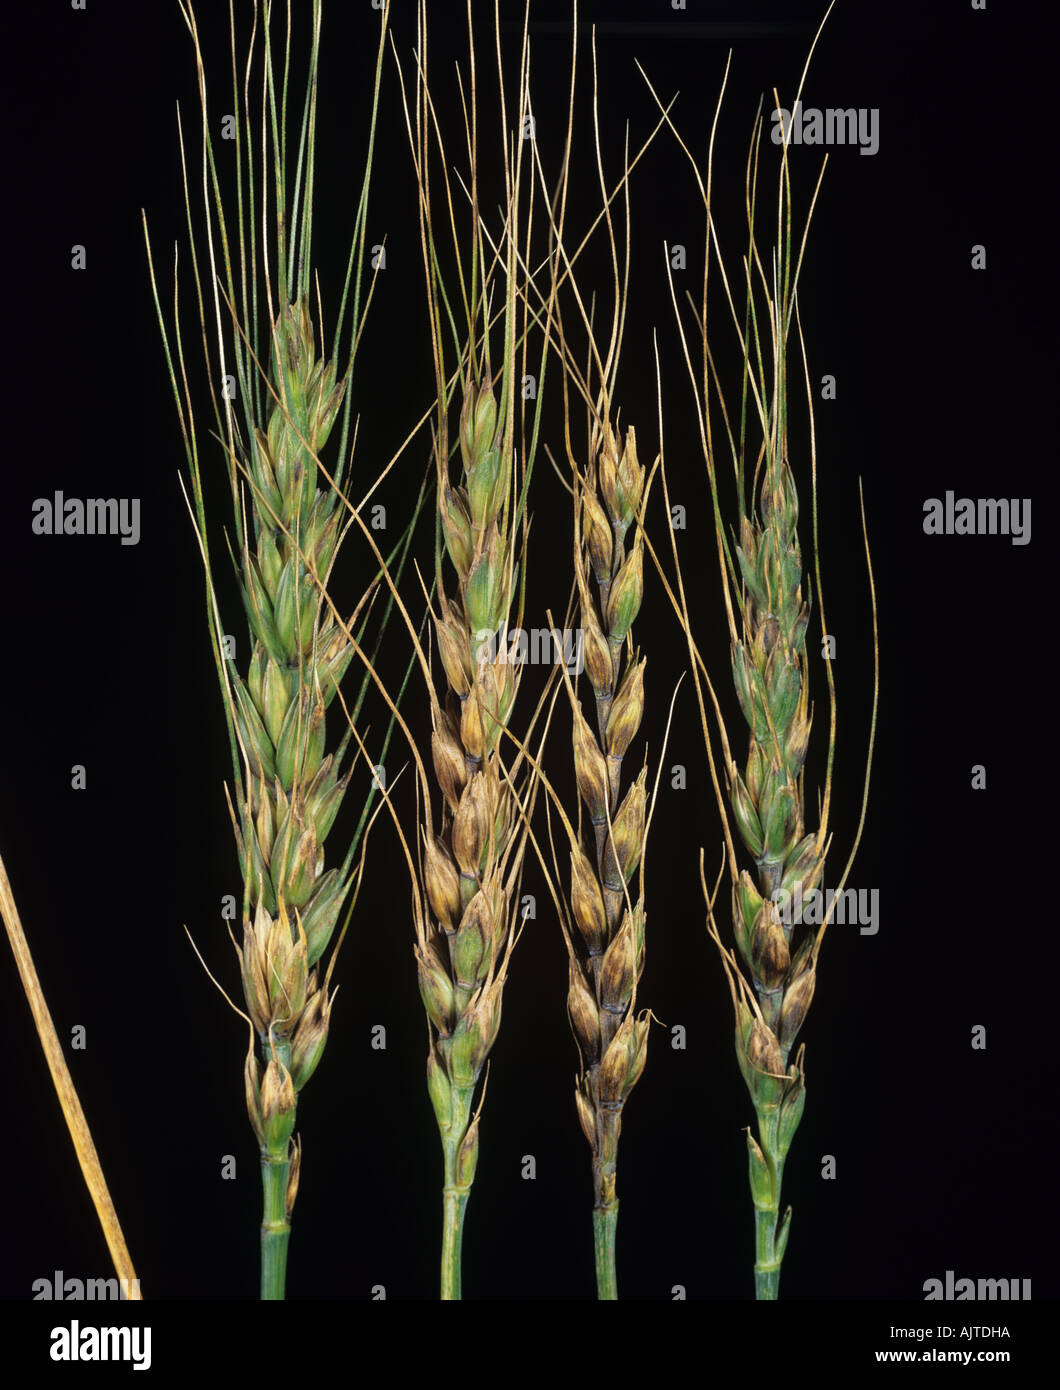 Glume blotch (Phaeosphaeria nodorum) lesions on ears of bearded awned wheat Stock Photo